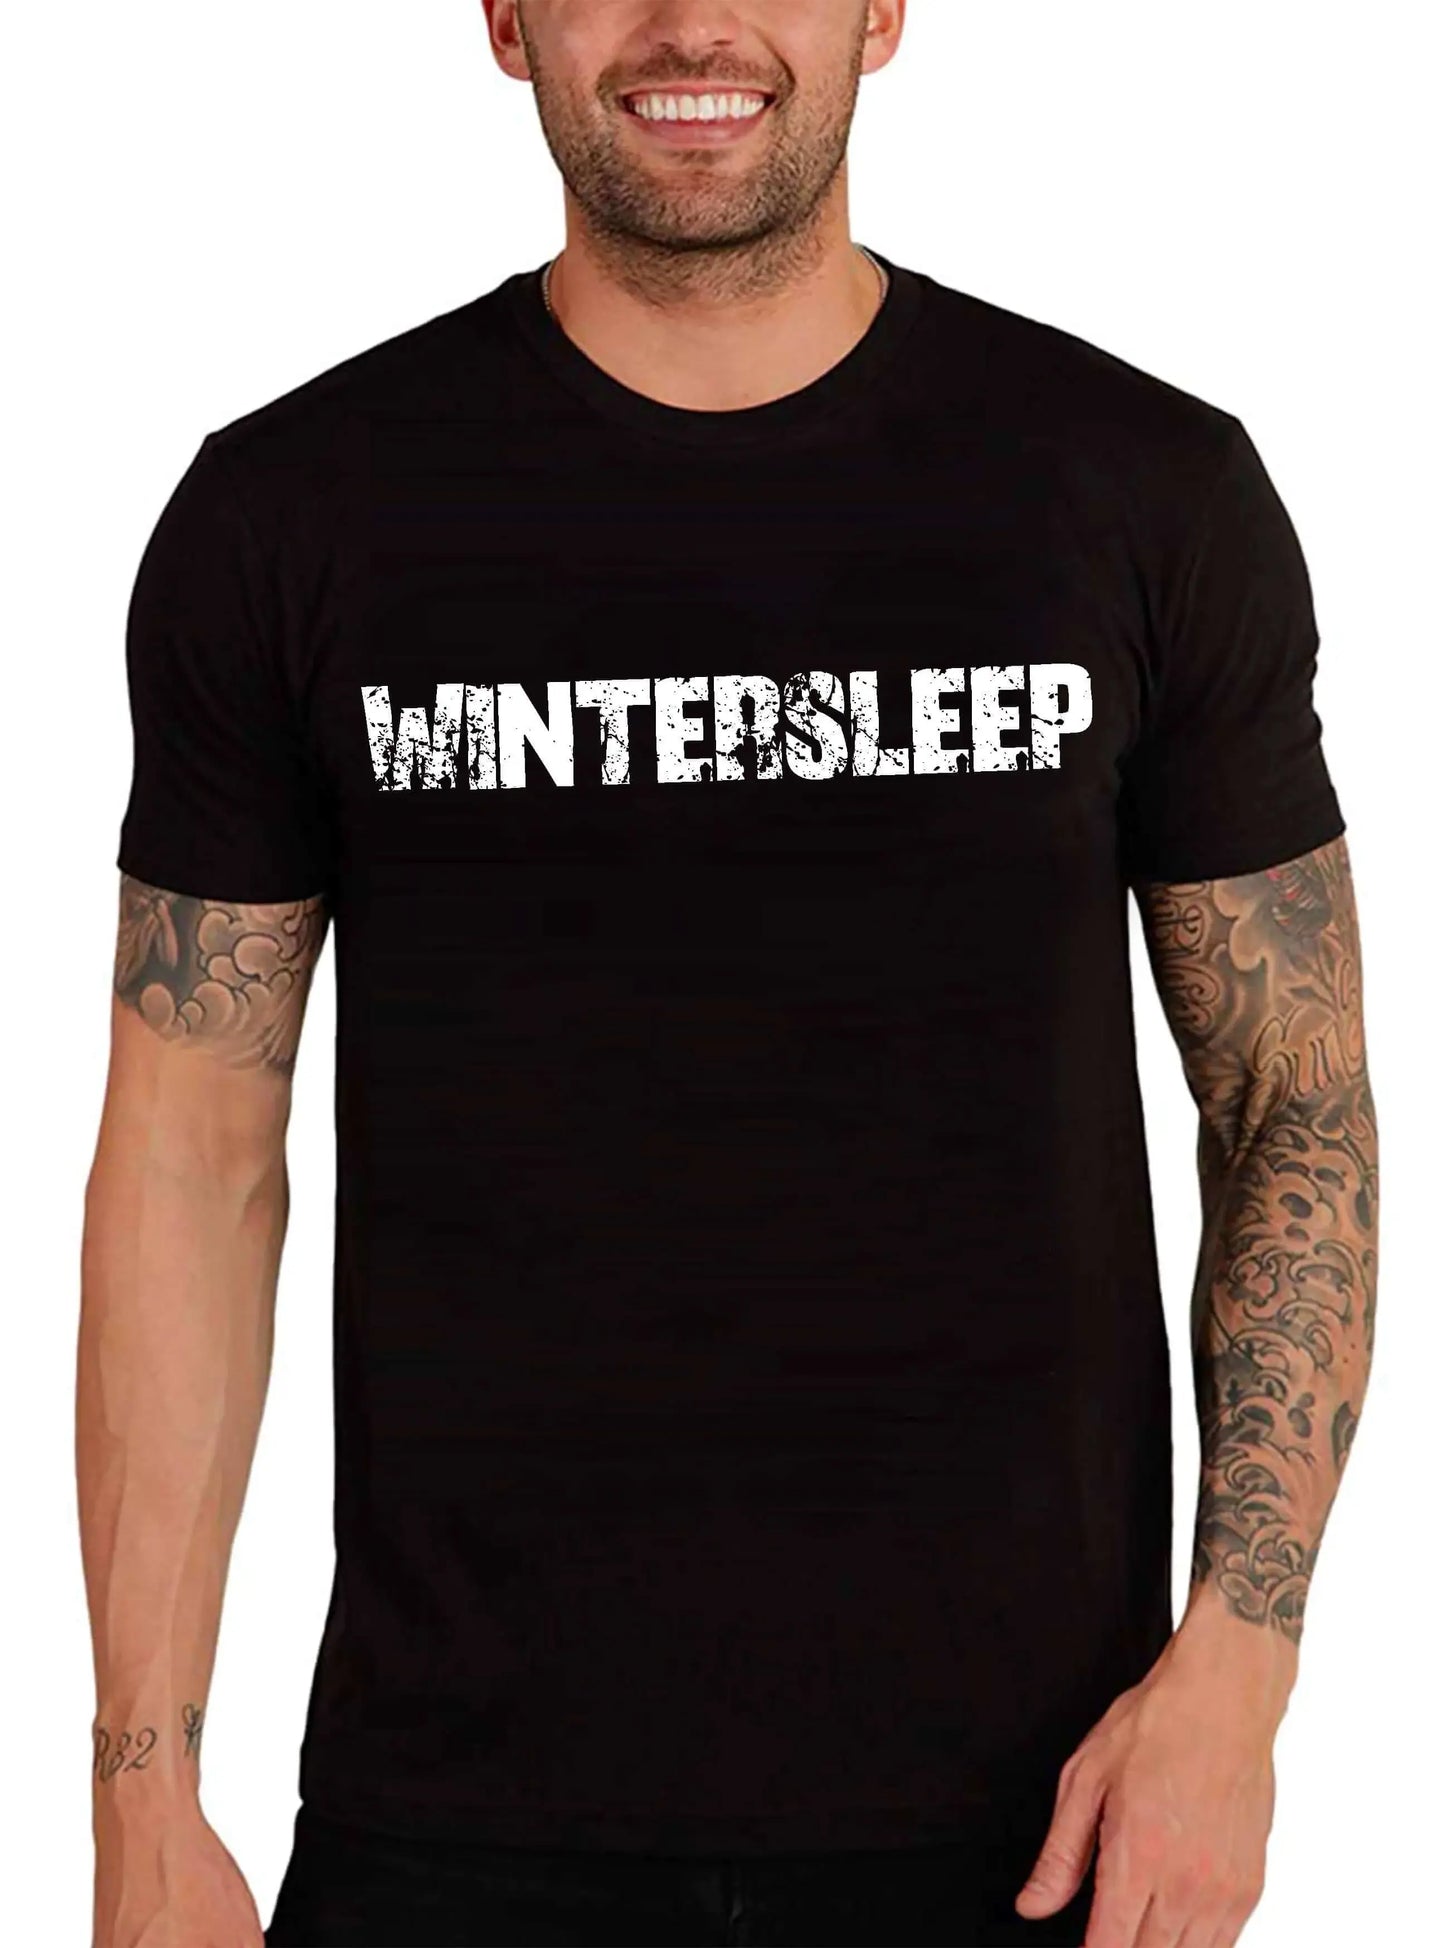 Men's Graphic T-Shirt Wintersleep Eco-Friendly Limited Edition Short Sleeve Tee-Shirt Vintage Birthday Gift Novelty